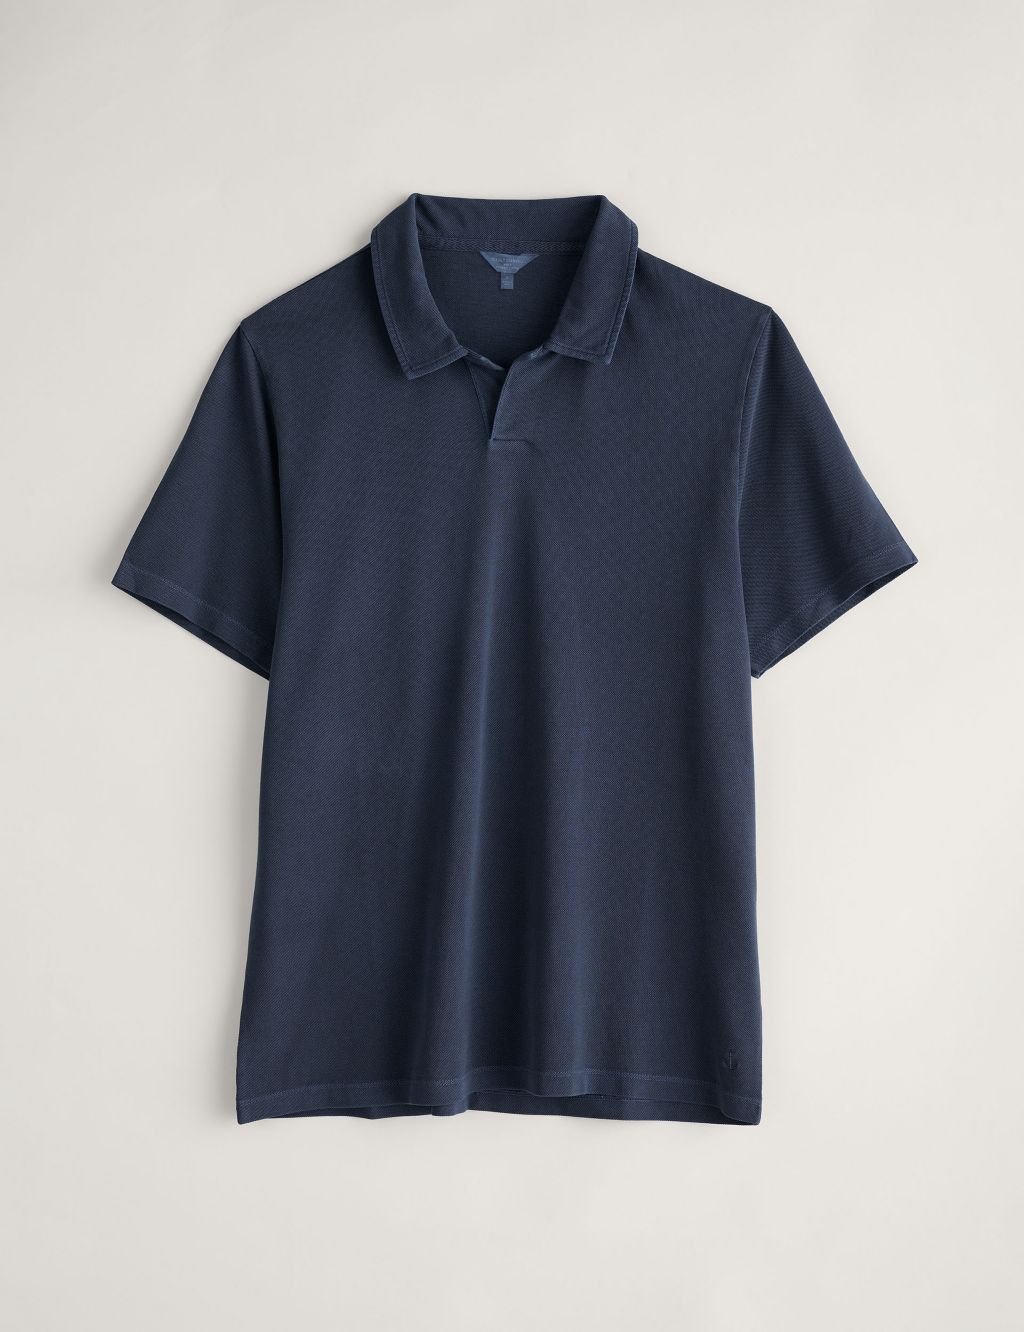 Buy Organic Cotton Pique Polo Shirt | Seasalt Cornwall | M&S